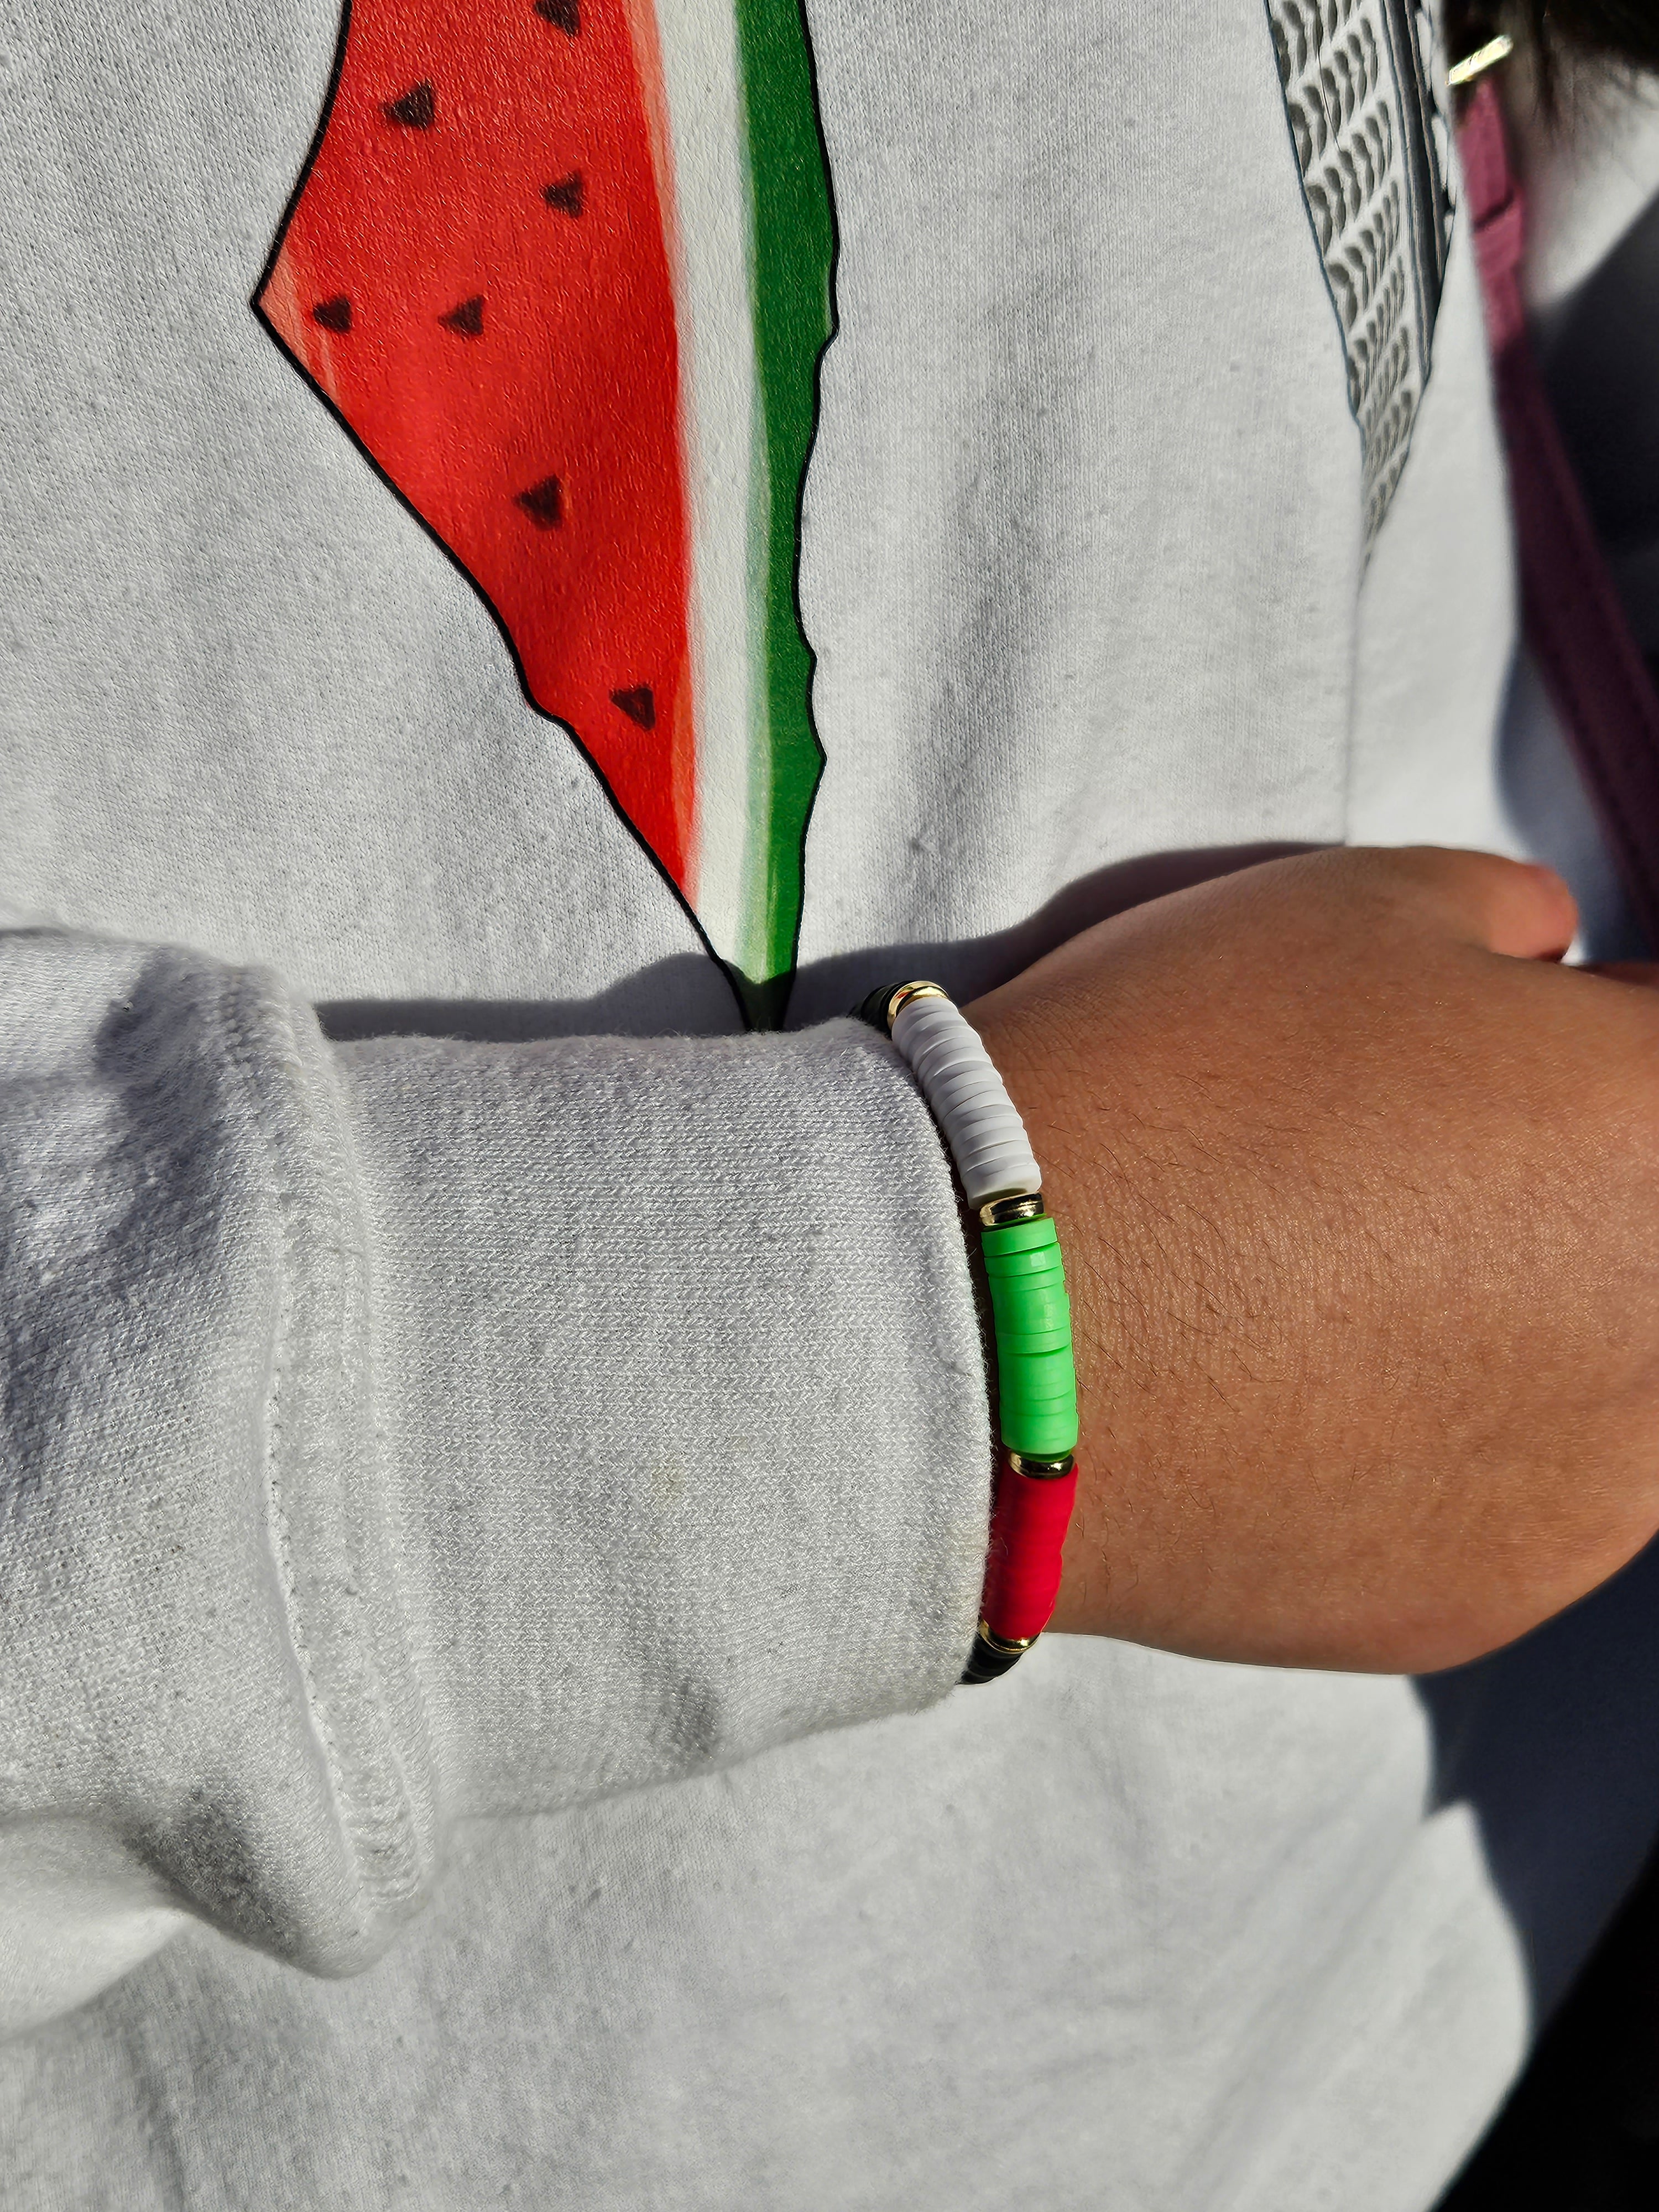 Palestine Colors Clay Bead Bracelets - Habibi Heritage